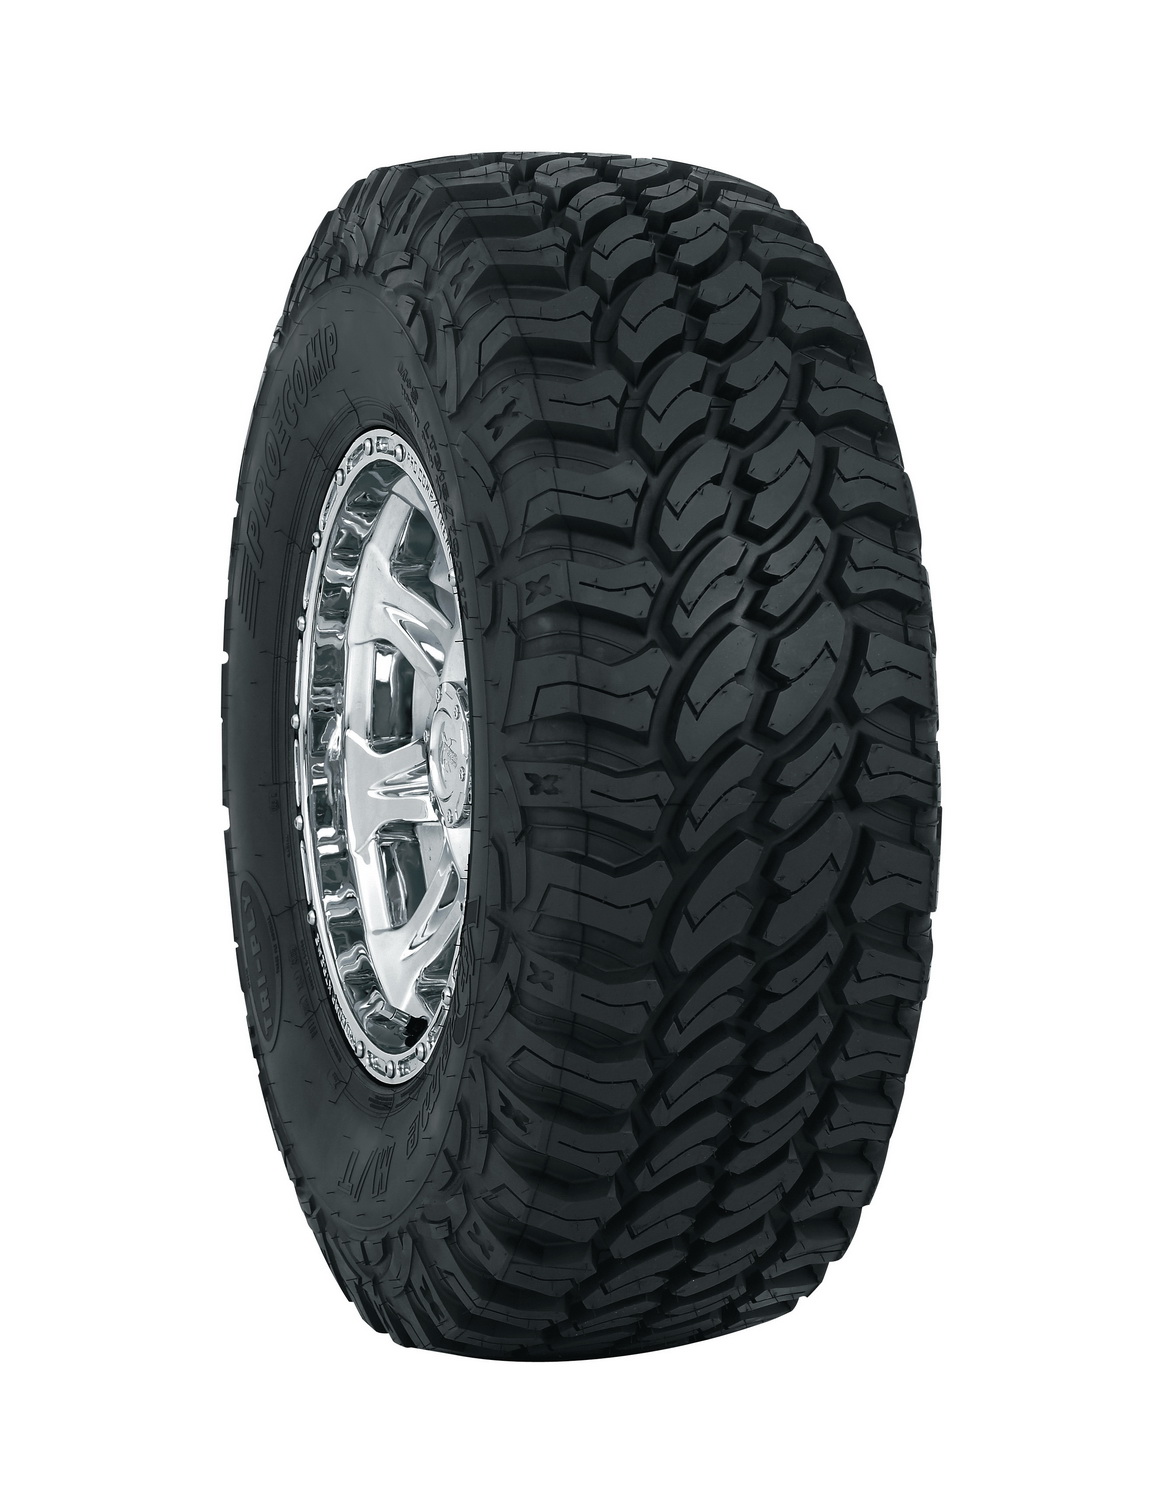 Pro Comp Tires Pro Comp Tires 67285 Pro Comp Xtreme Mud Terrain; Tire